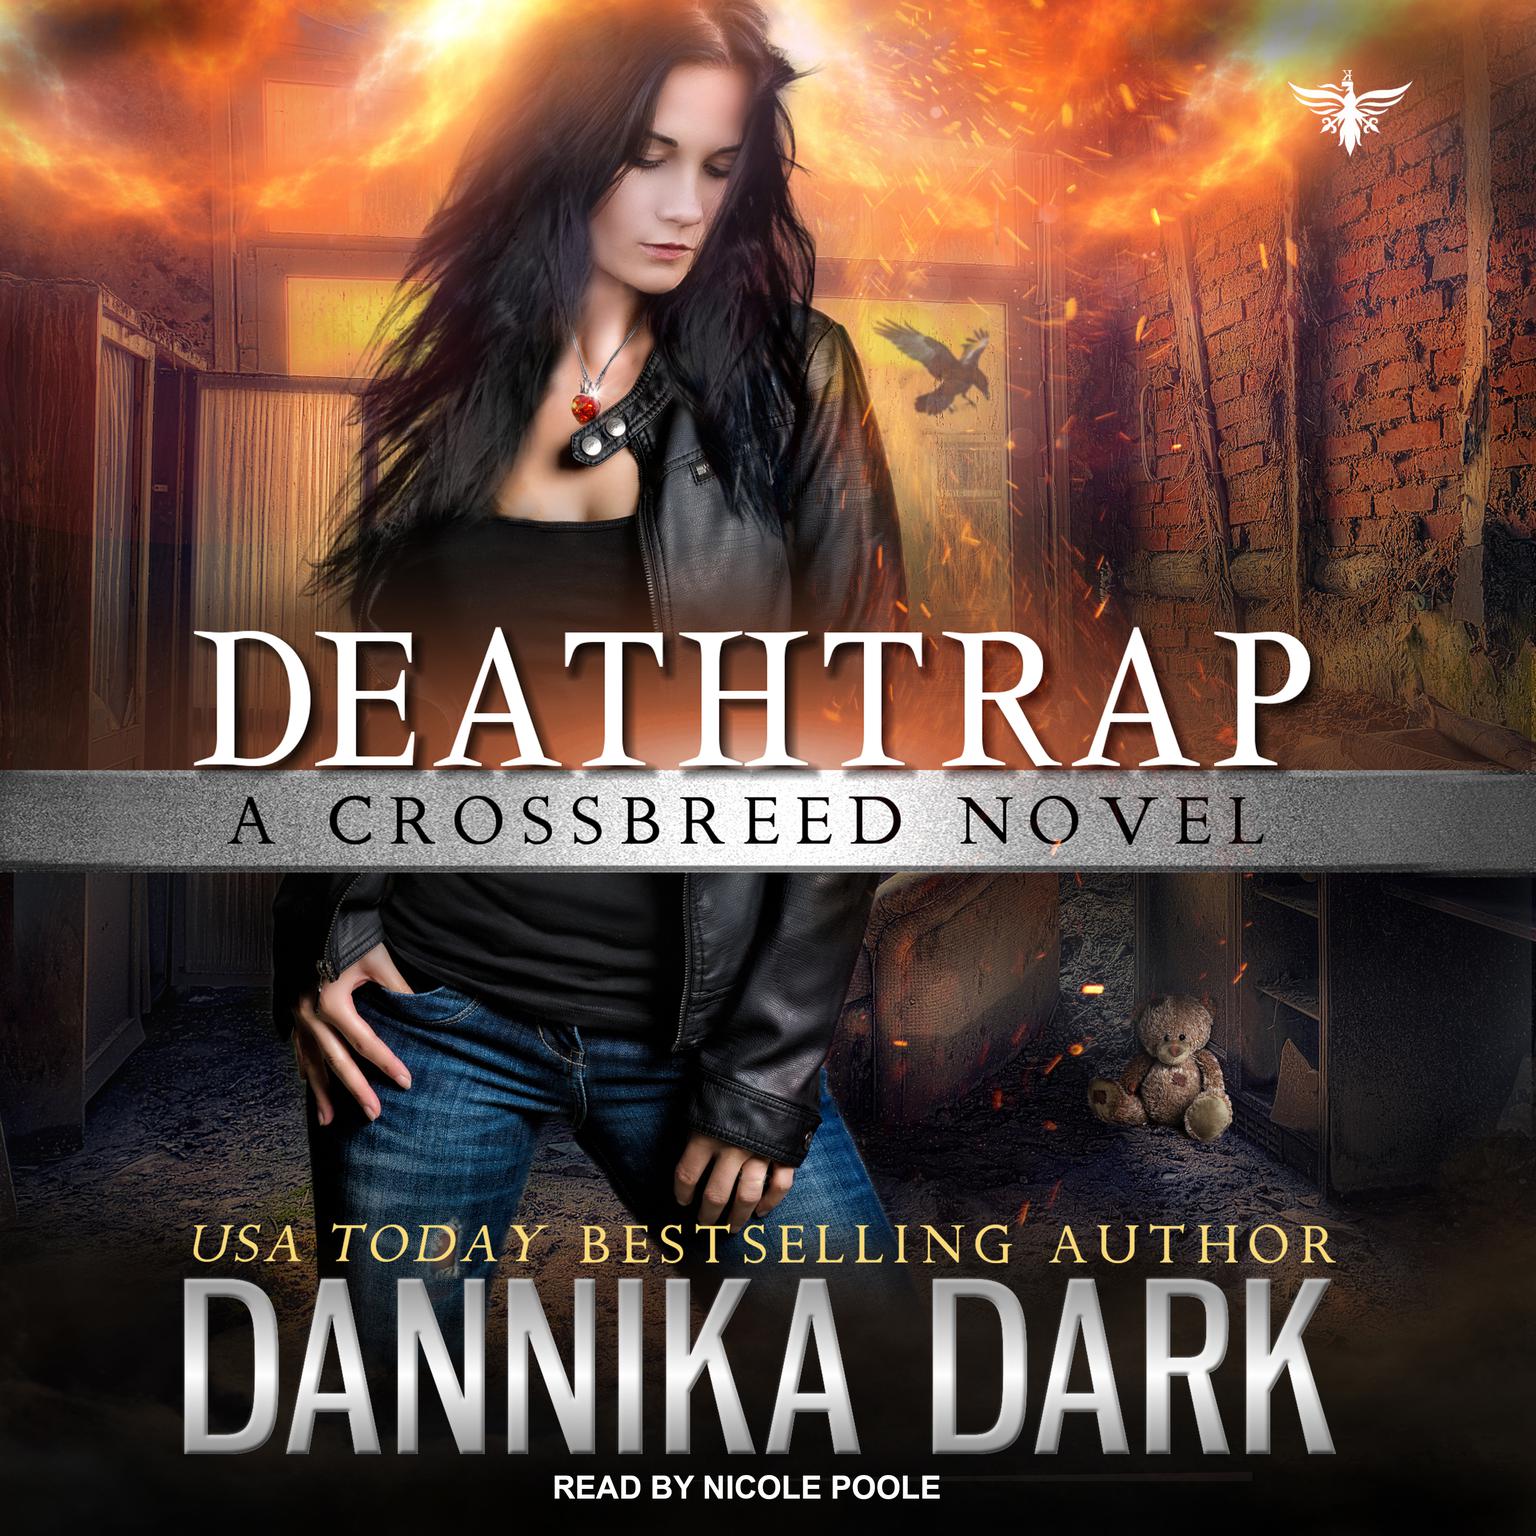 Deathtrap Audiobook, by Dannika Dark